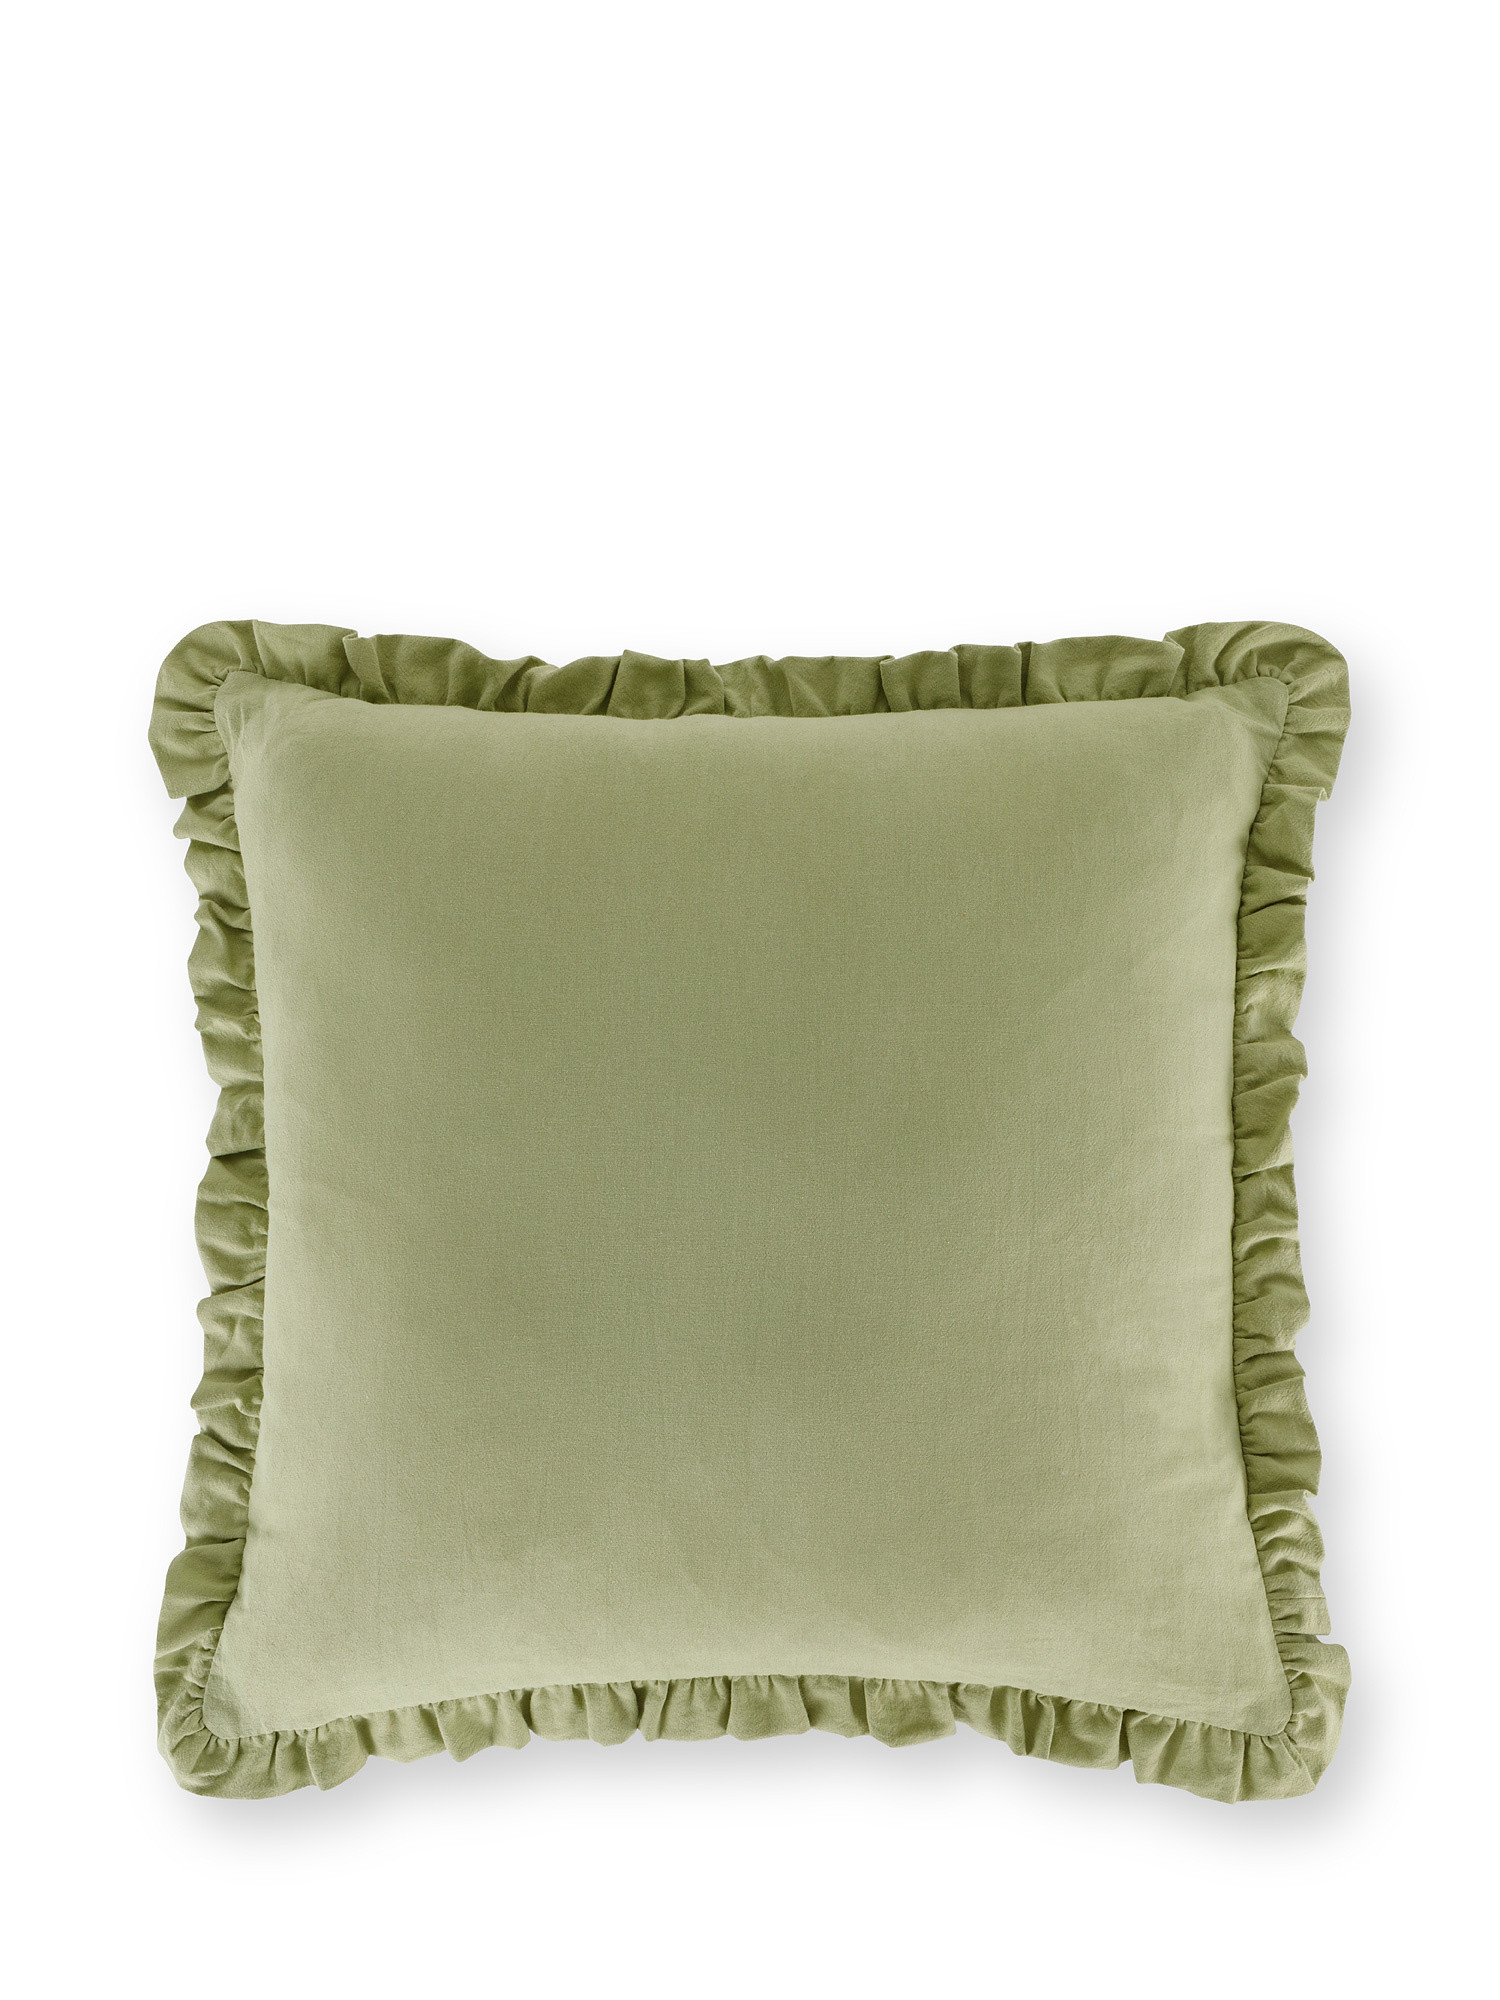 Cuscino cotone con volant 45x45cm, Verde, large image number 0